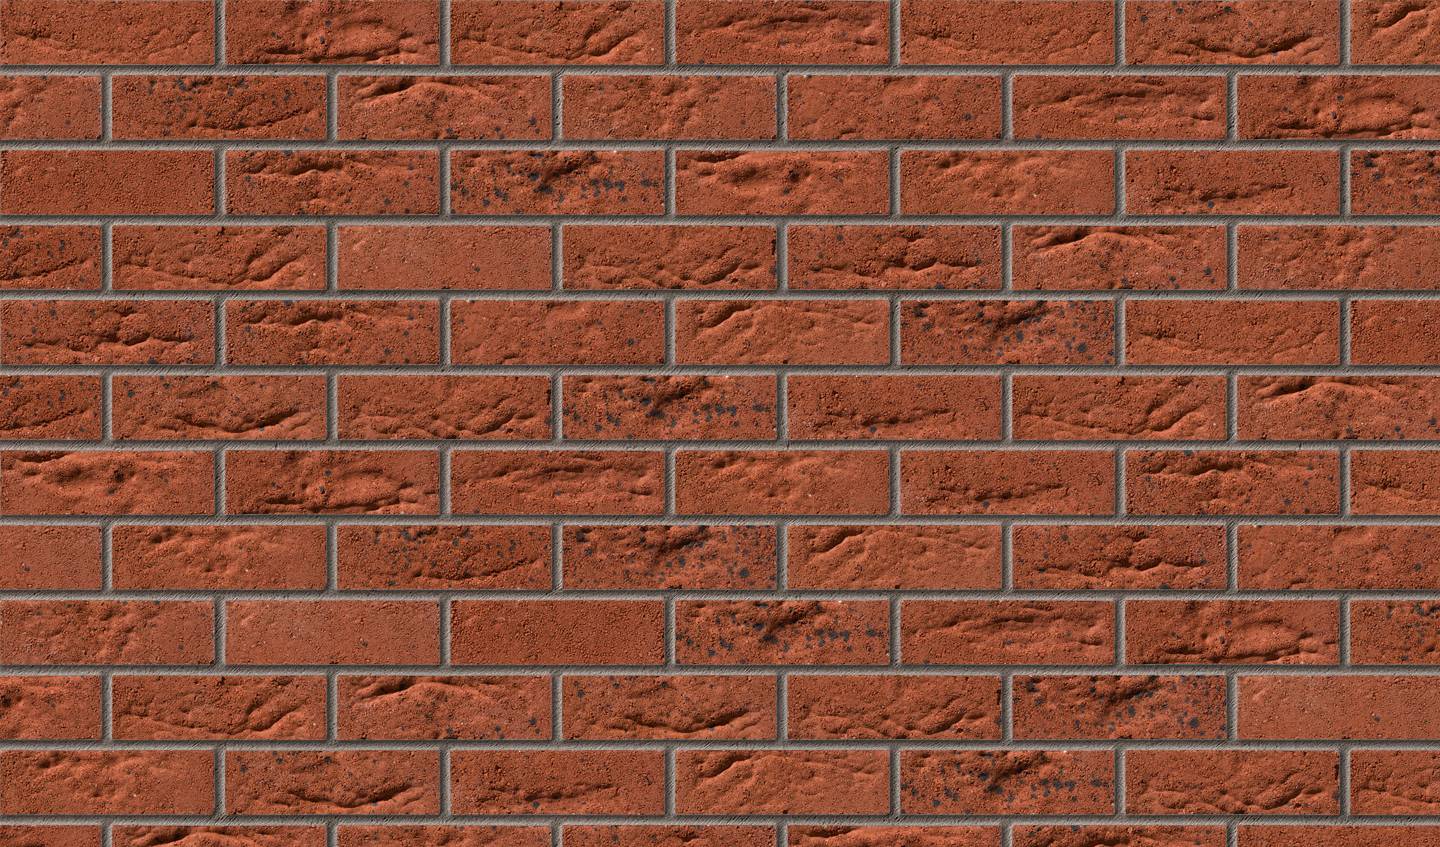 Darton Red Facing Brick